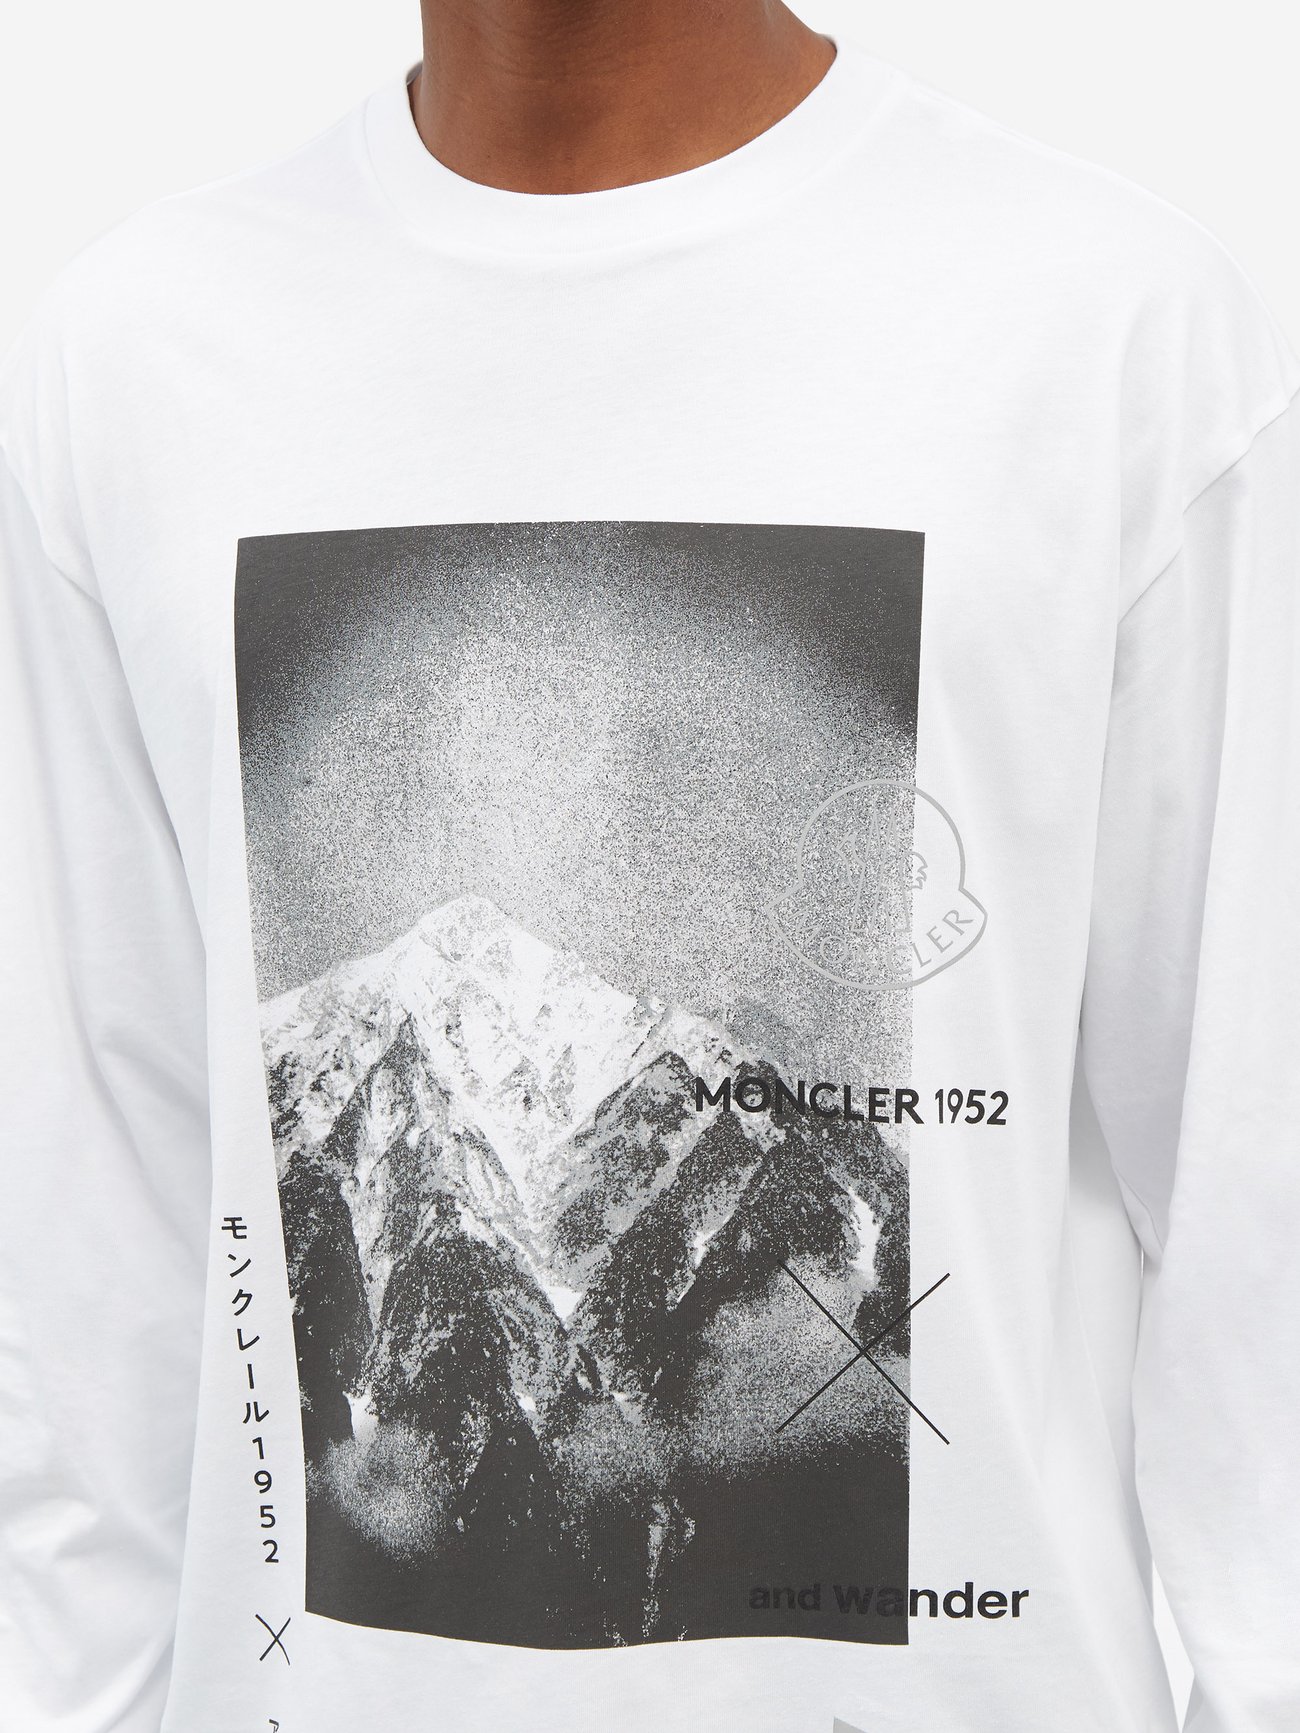 moncler 1952 and wander black t-shirt